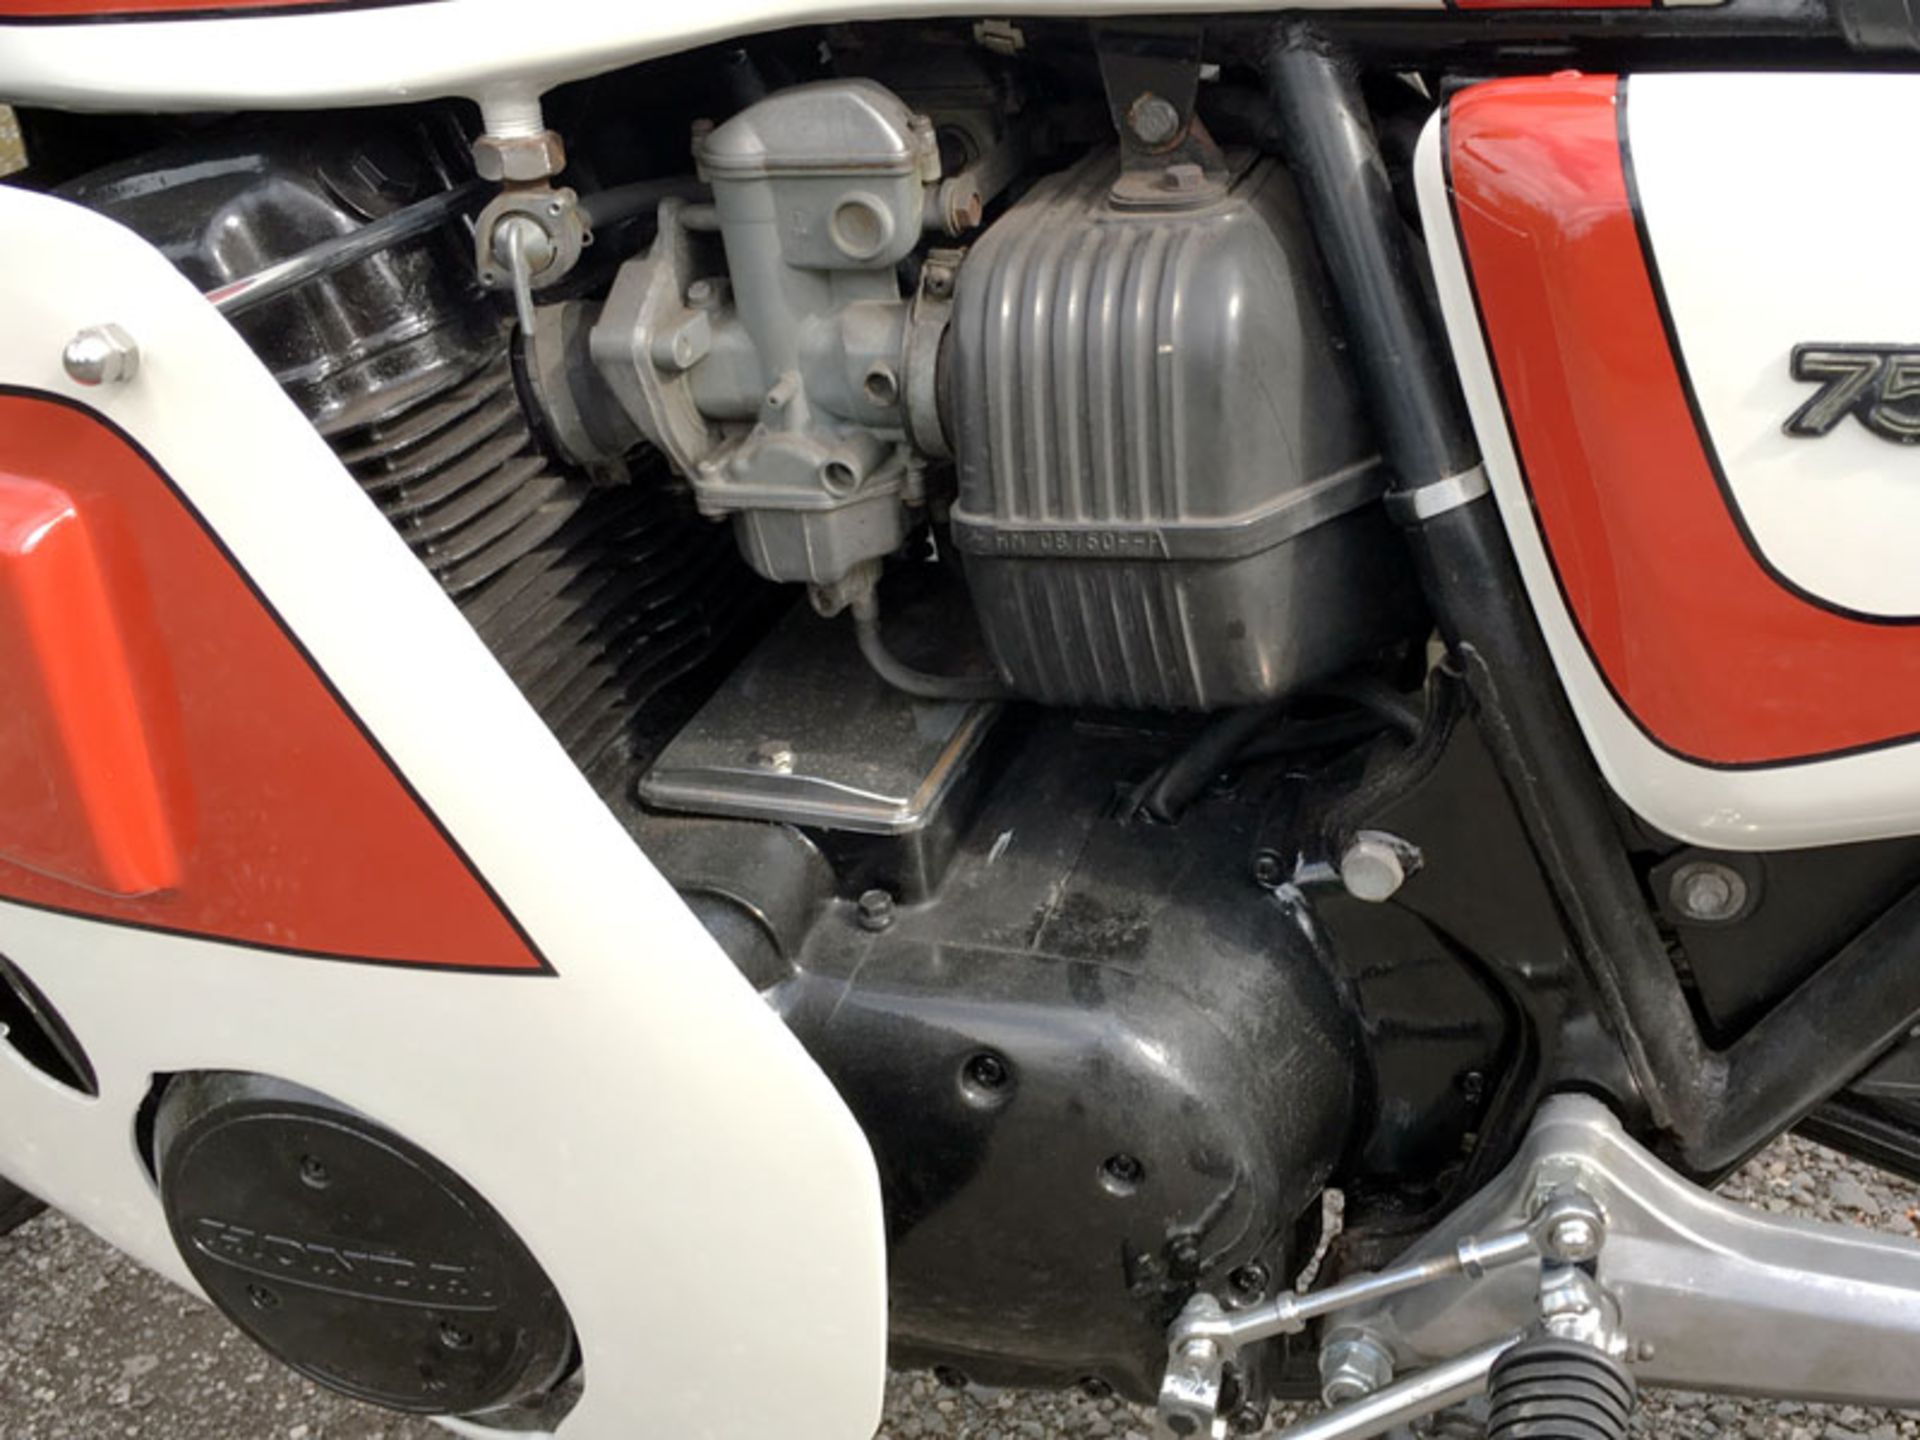 1979 Honda CB750 SS Britain - Image 4 of 4